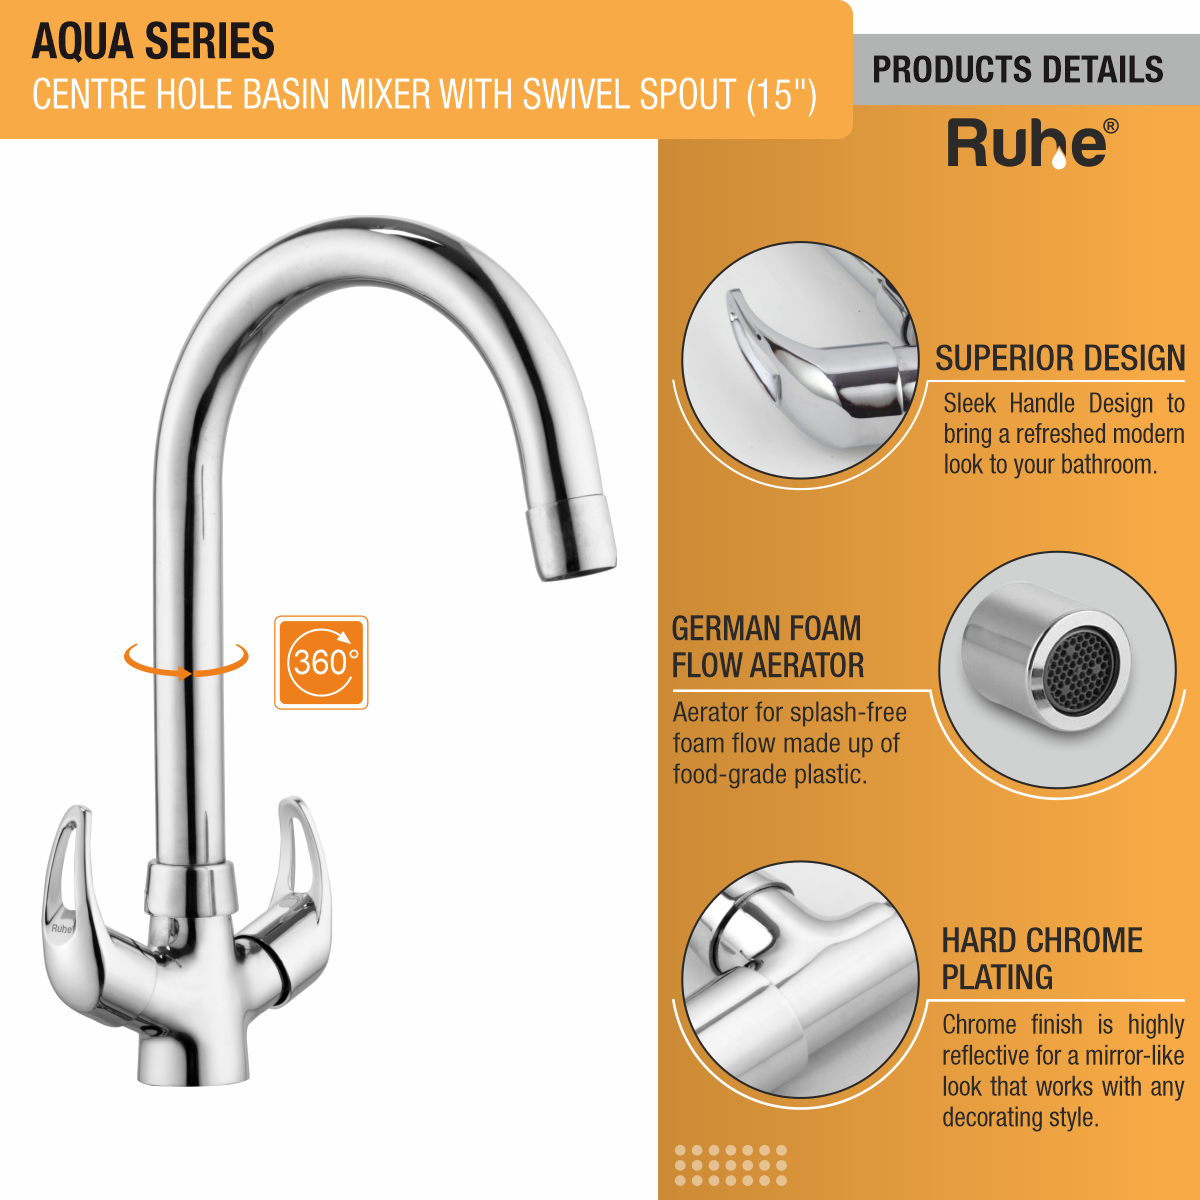 Aqua Centre Hole Basin Mixer with Medium (15 inches) Round Swivel Spout Faucet product details